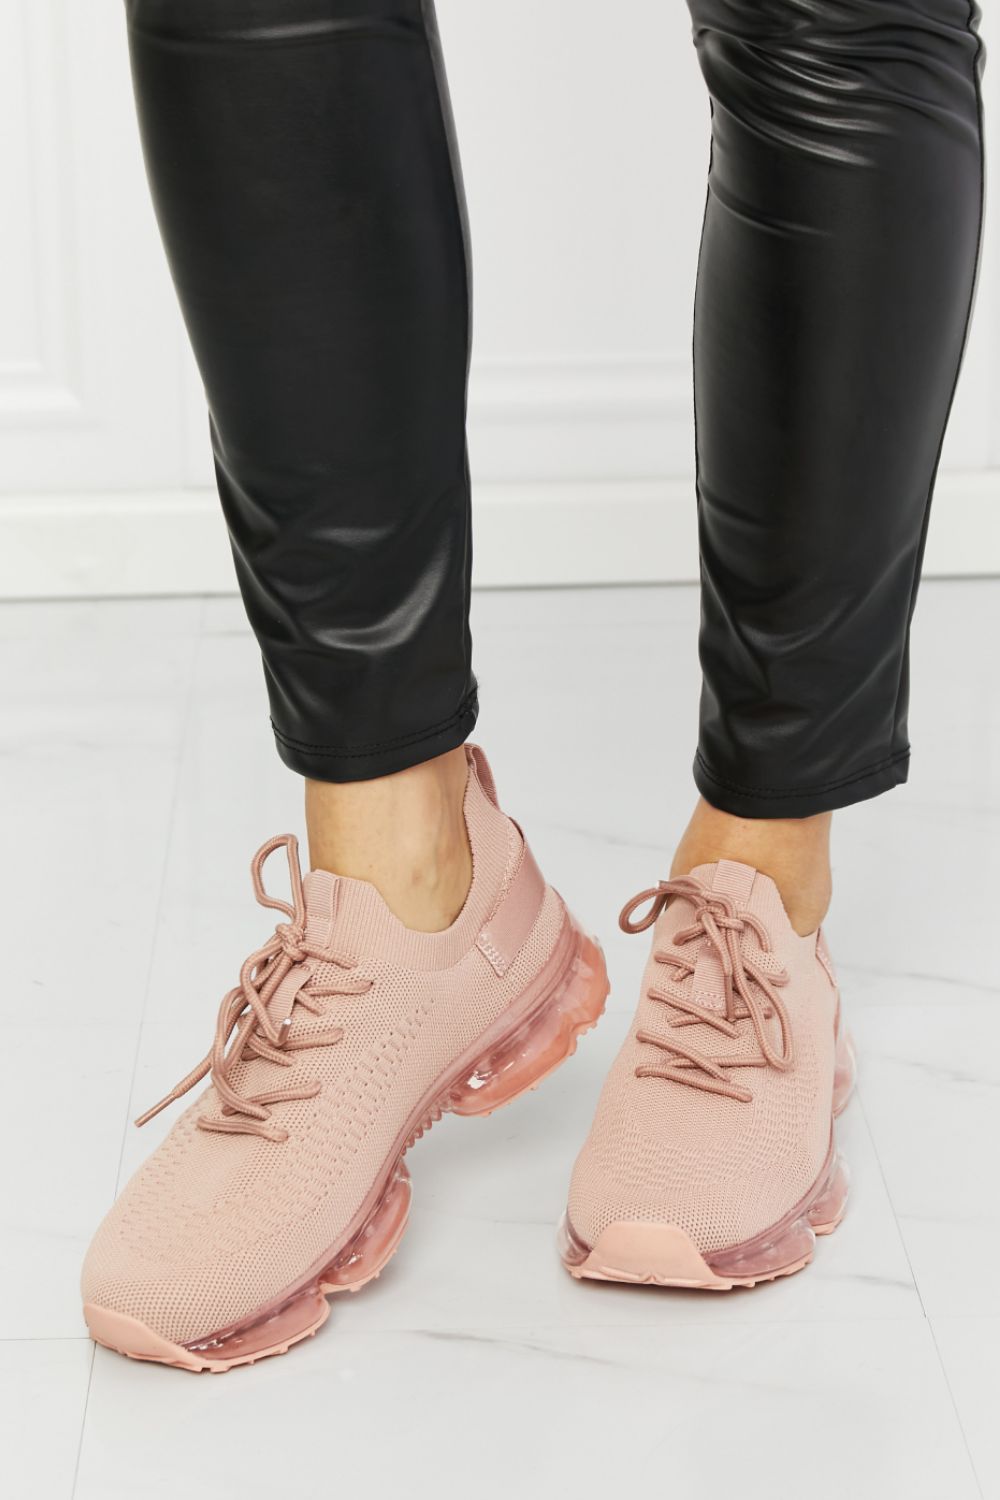 Gemma Forever Link Lace-Up Sneakers- 1 size 6.5, Mauve left! FINAL SALE!